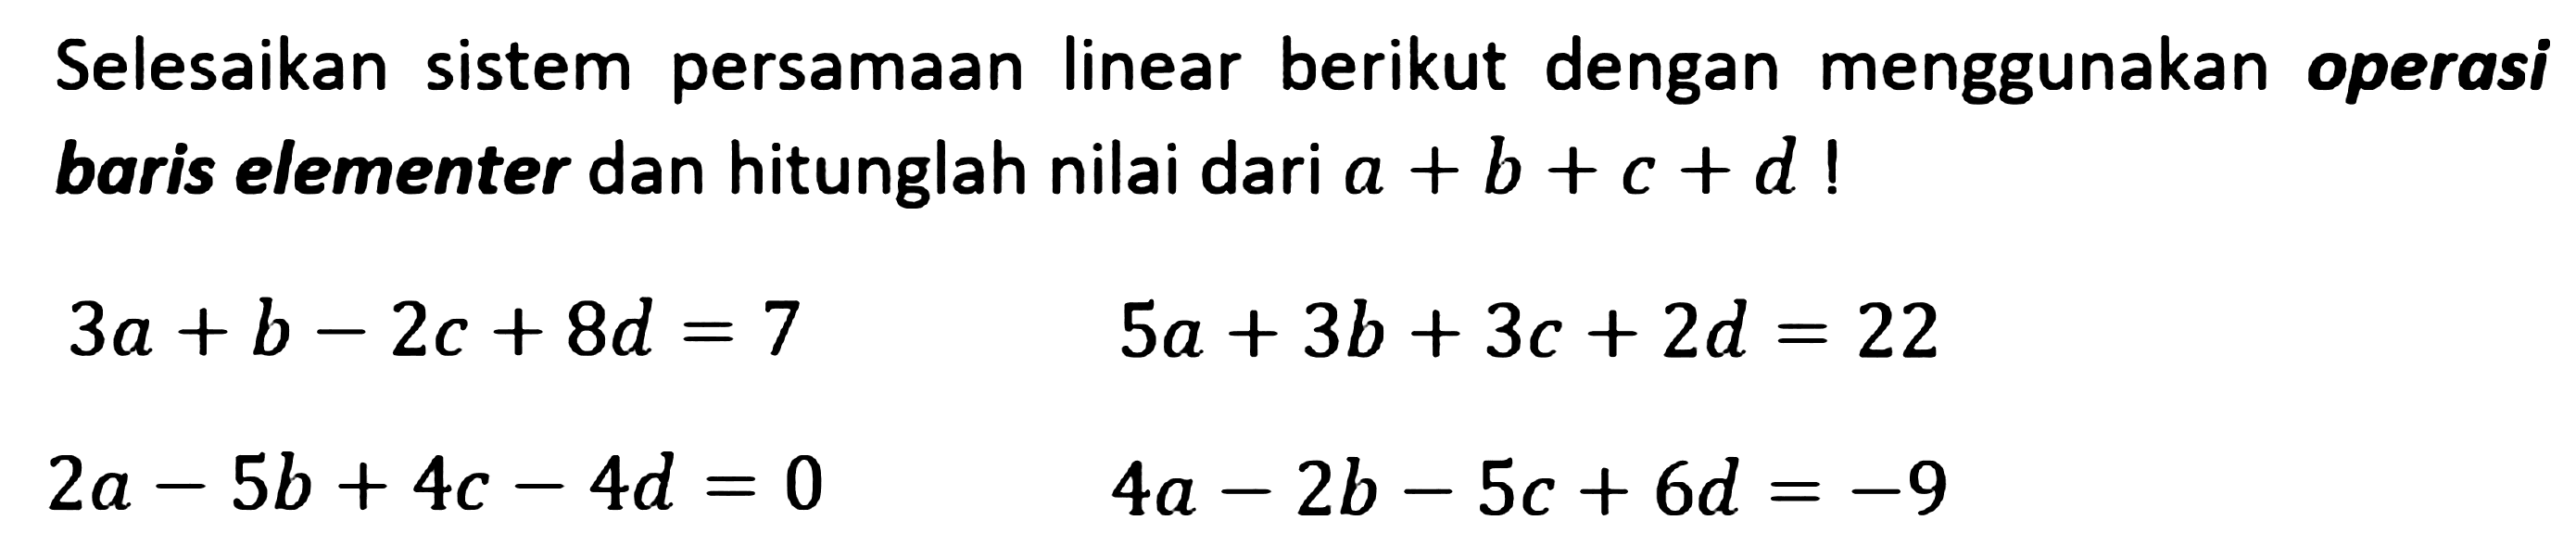 Selesaikan sistem persamaan linear berikut dengan menggunakan operasi baris elementer dan hitunglah nilai dari a+b+c+d! 3a+b-2c+8d=7 5a+3b+3c+2d=22 2a-5b+4c-4d=0 4a-2b-5c+6d=-9